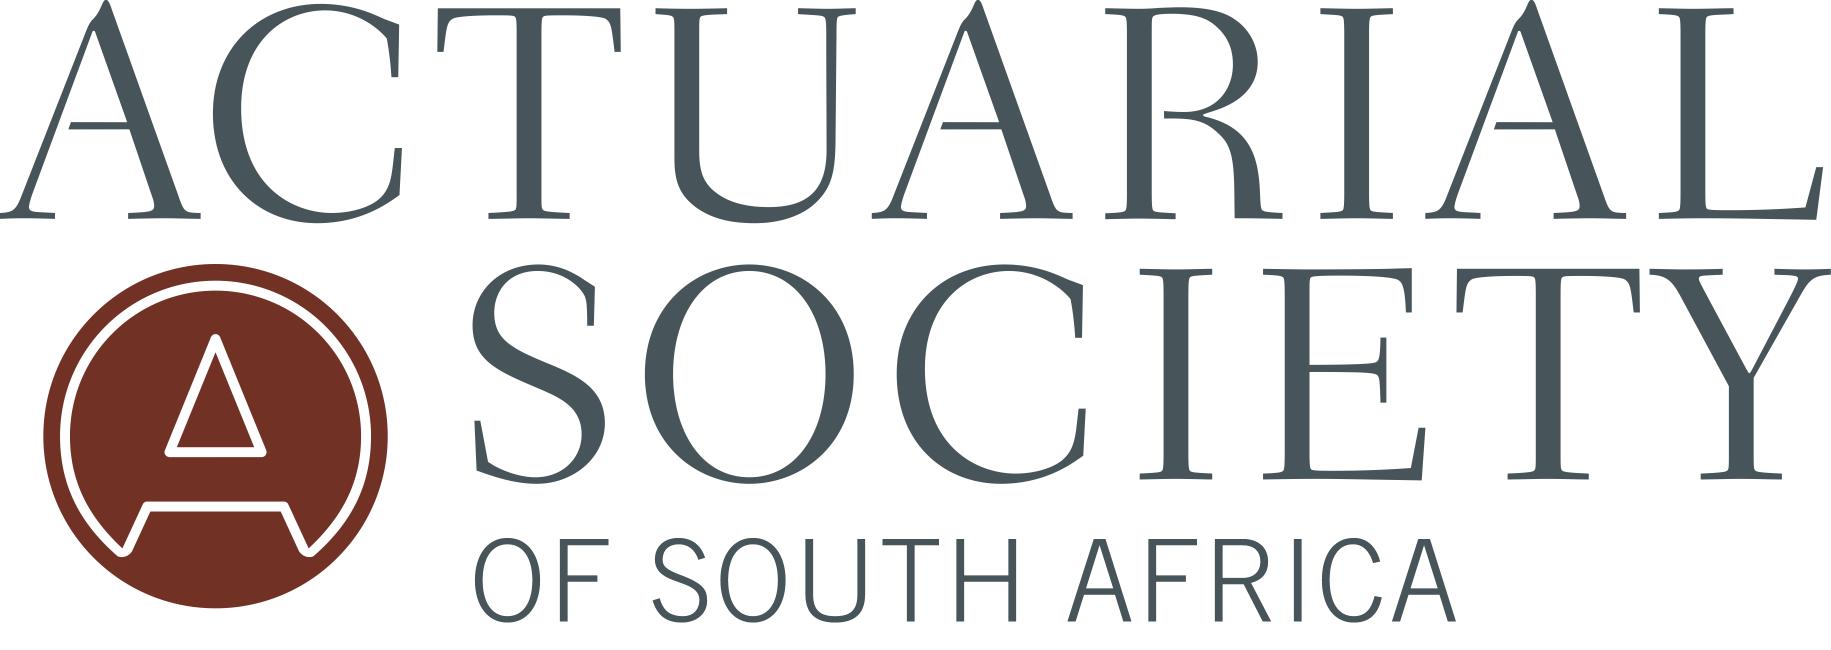 Actuarial society logo.jpg